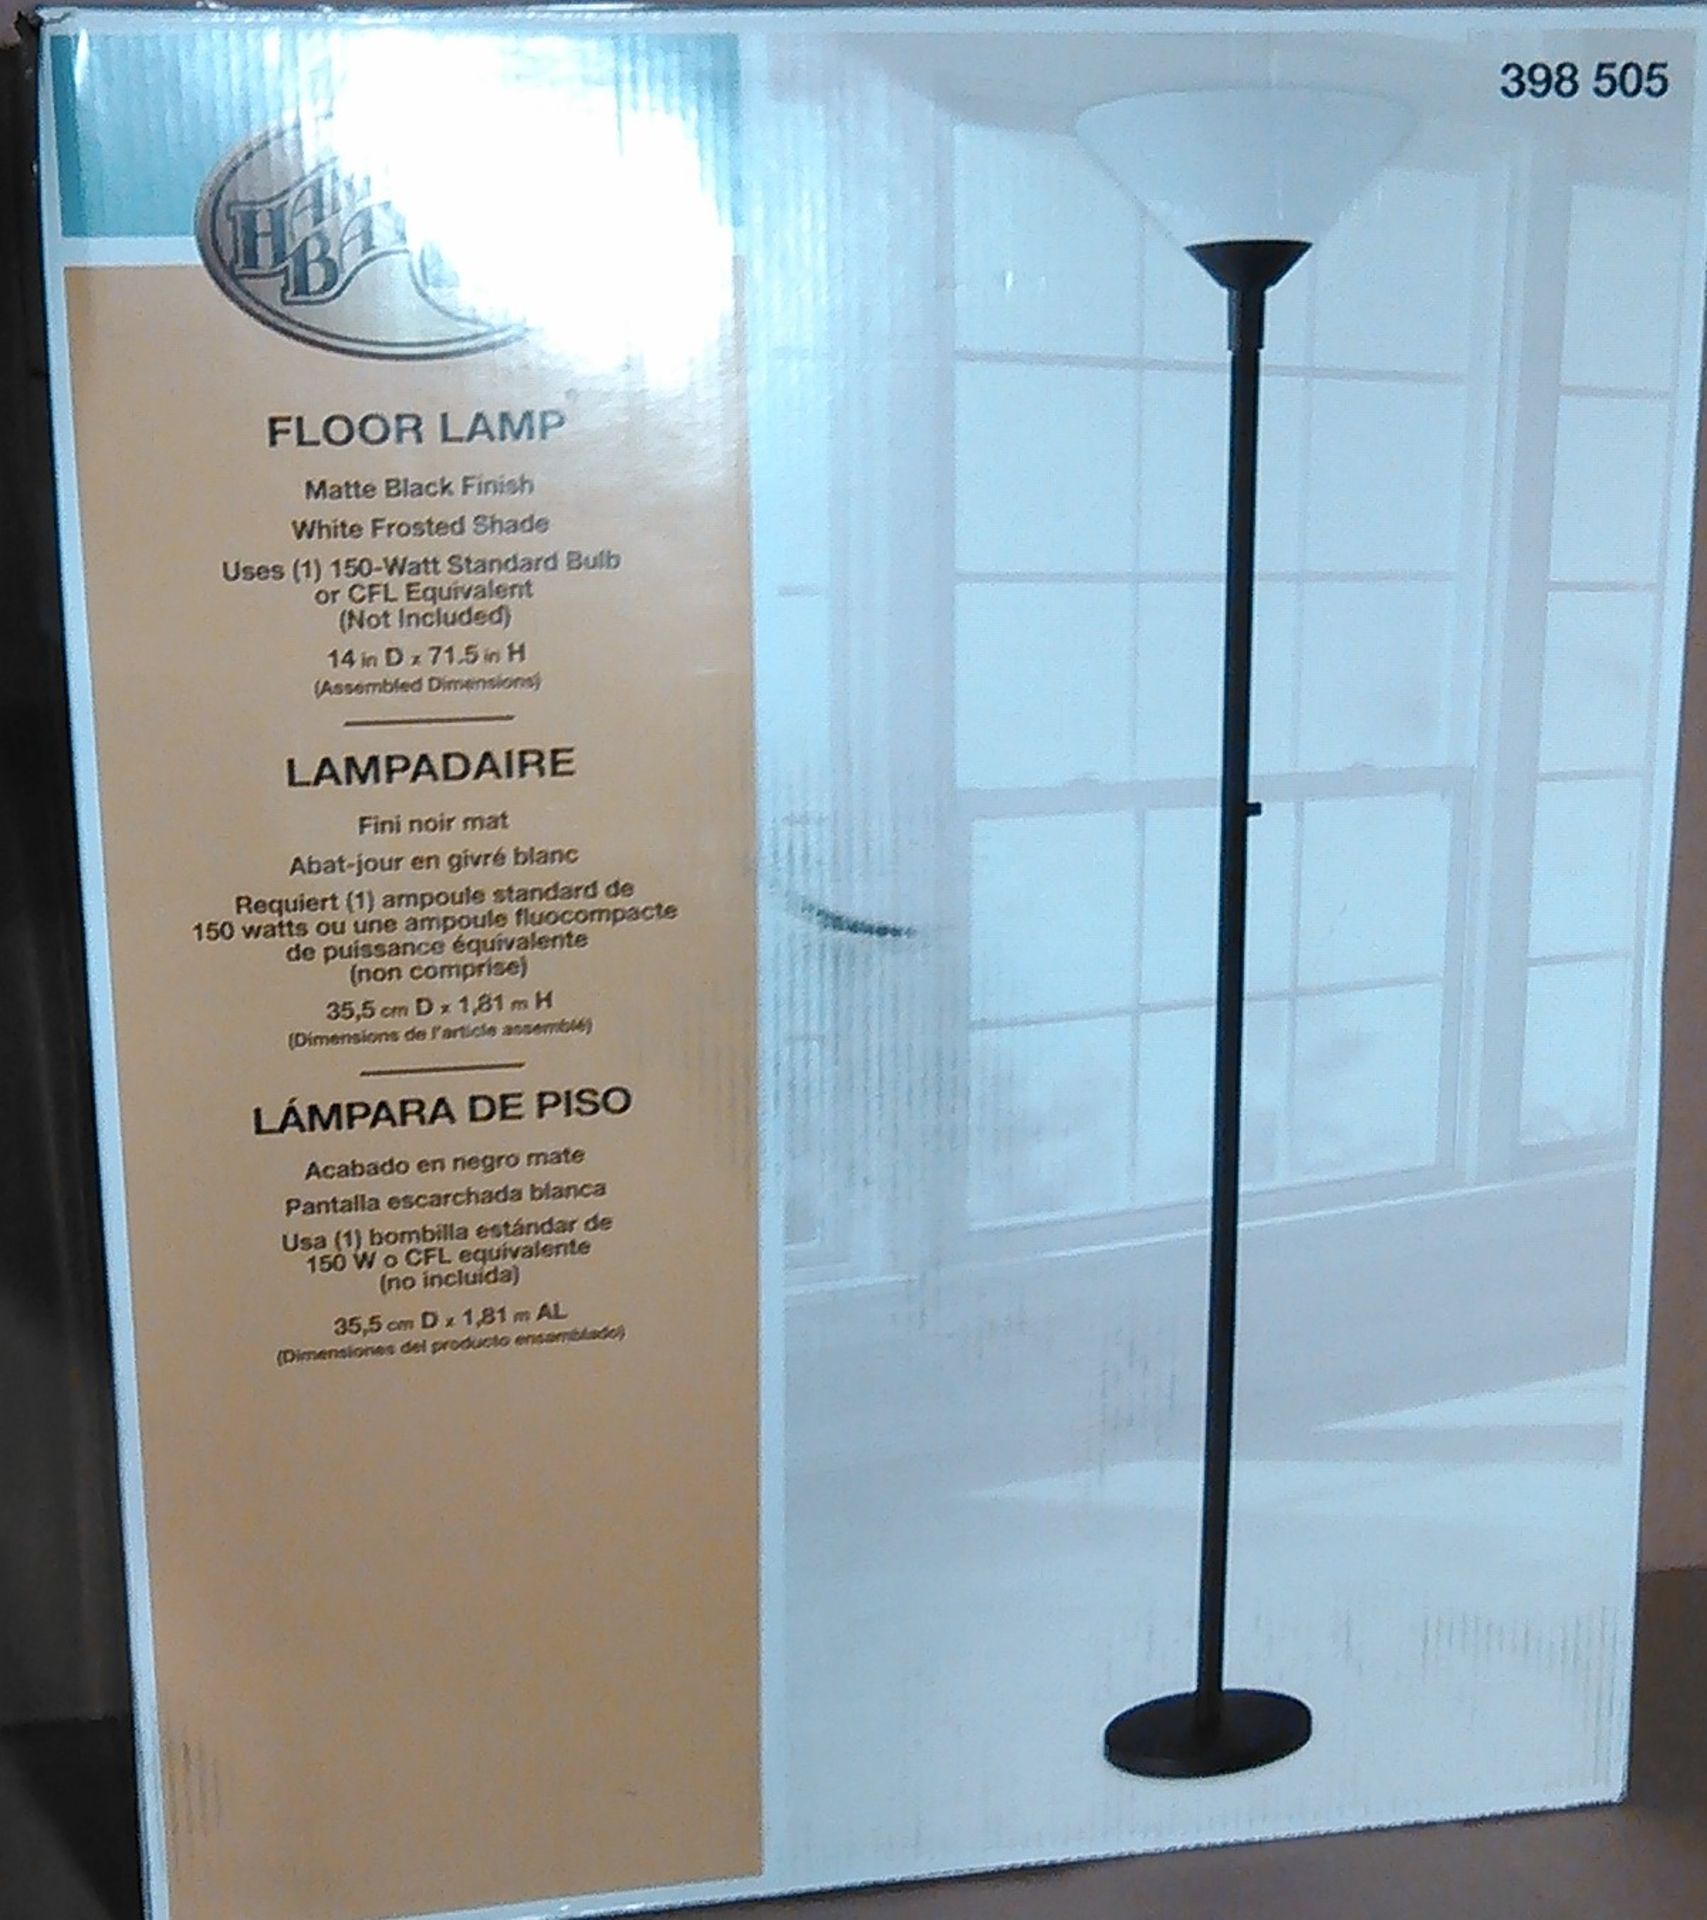 Hampton Bay Floor Lamp, Black Finish with White Shade 14" Deep x 71.5" High. Retail in Major Home